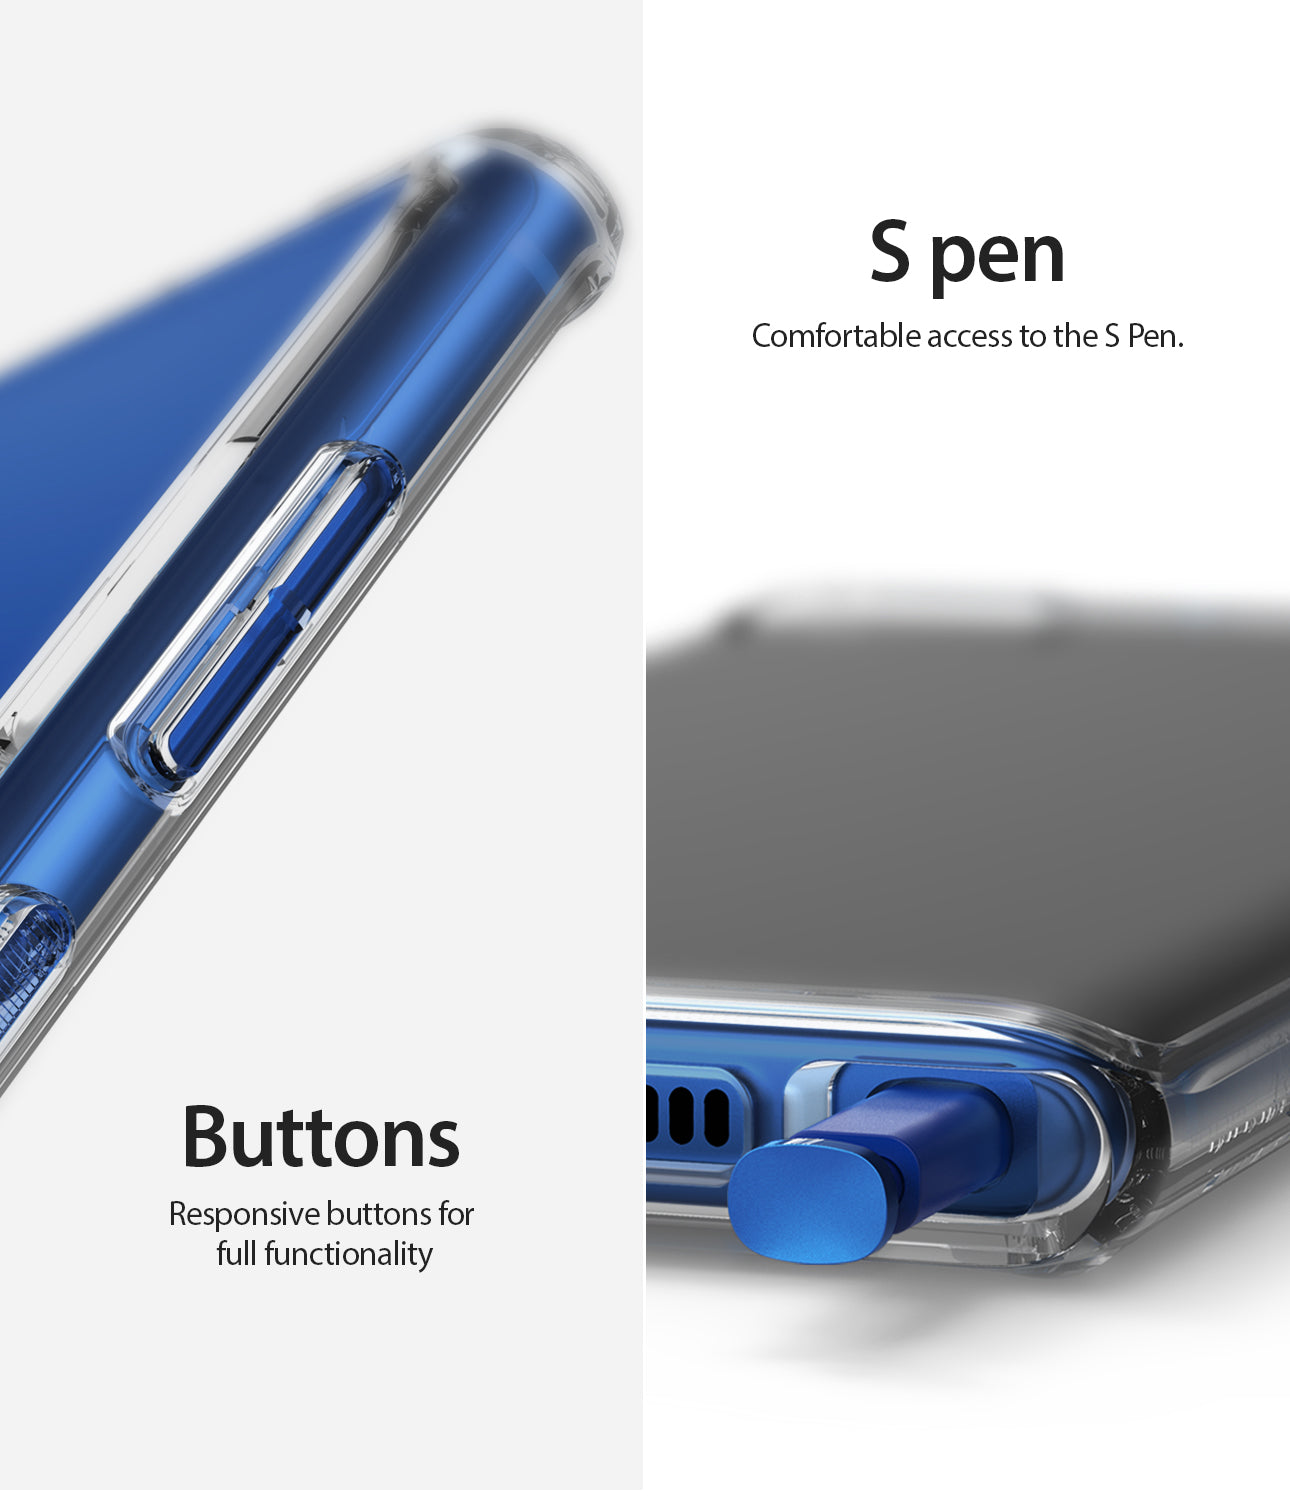 comfortable access to s pen with precise button cutouts